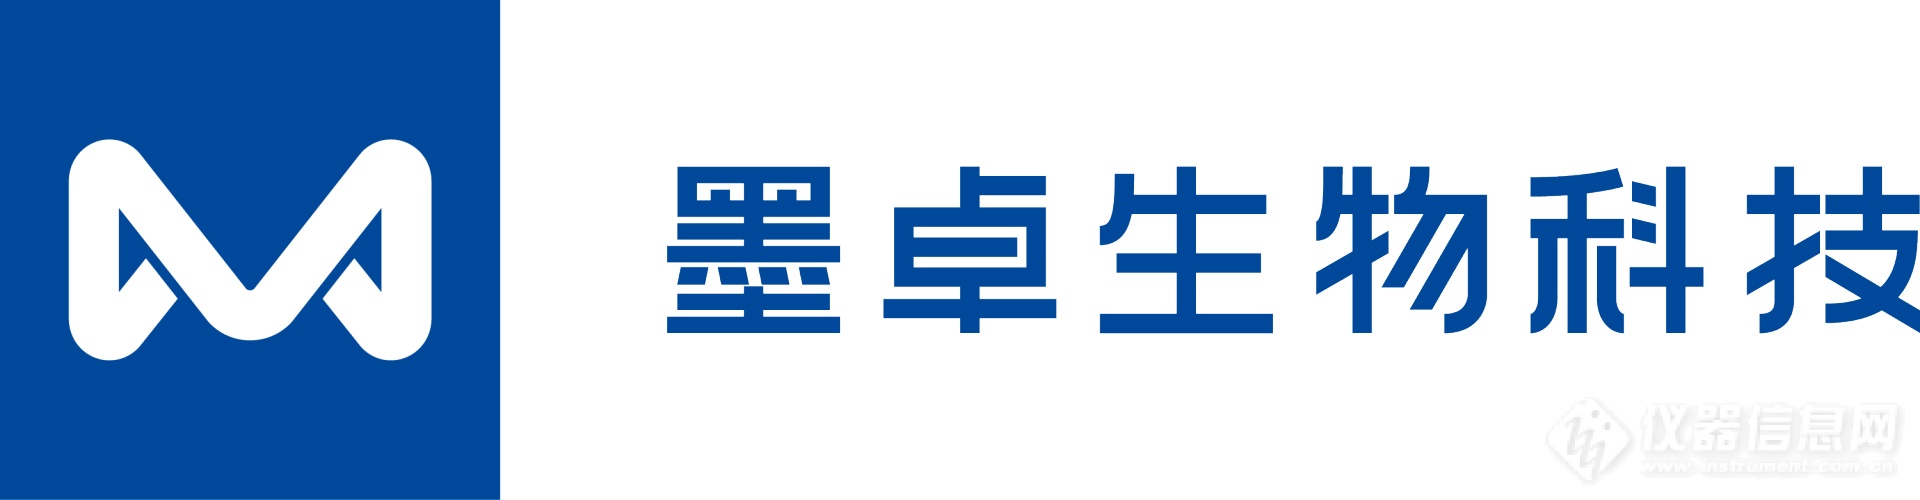 墨卓生物 logo.png